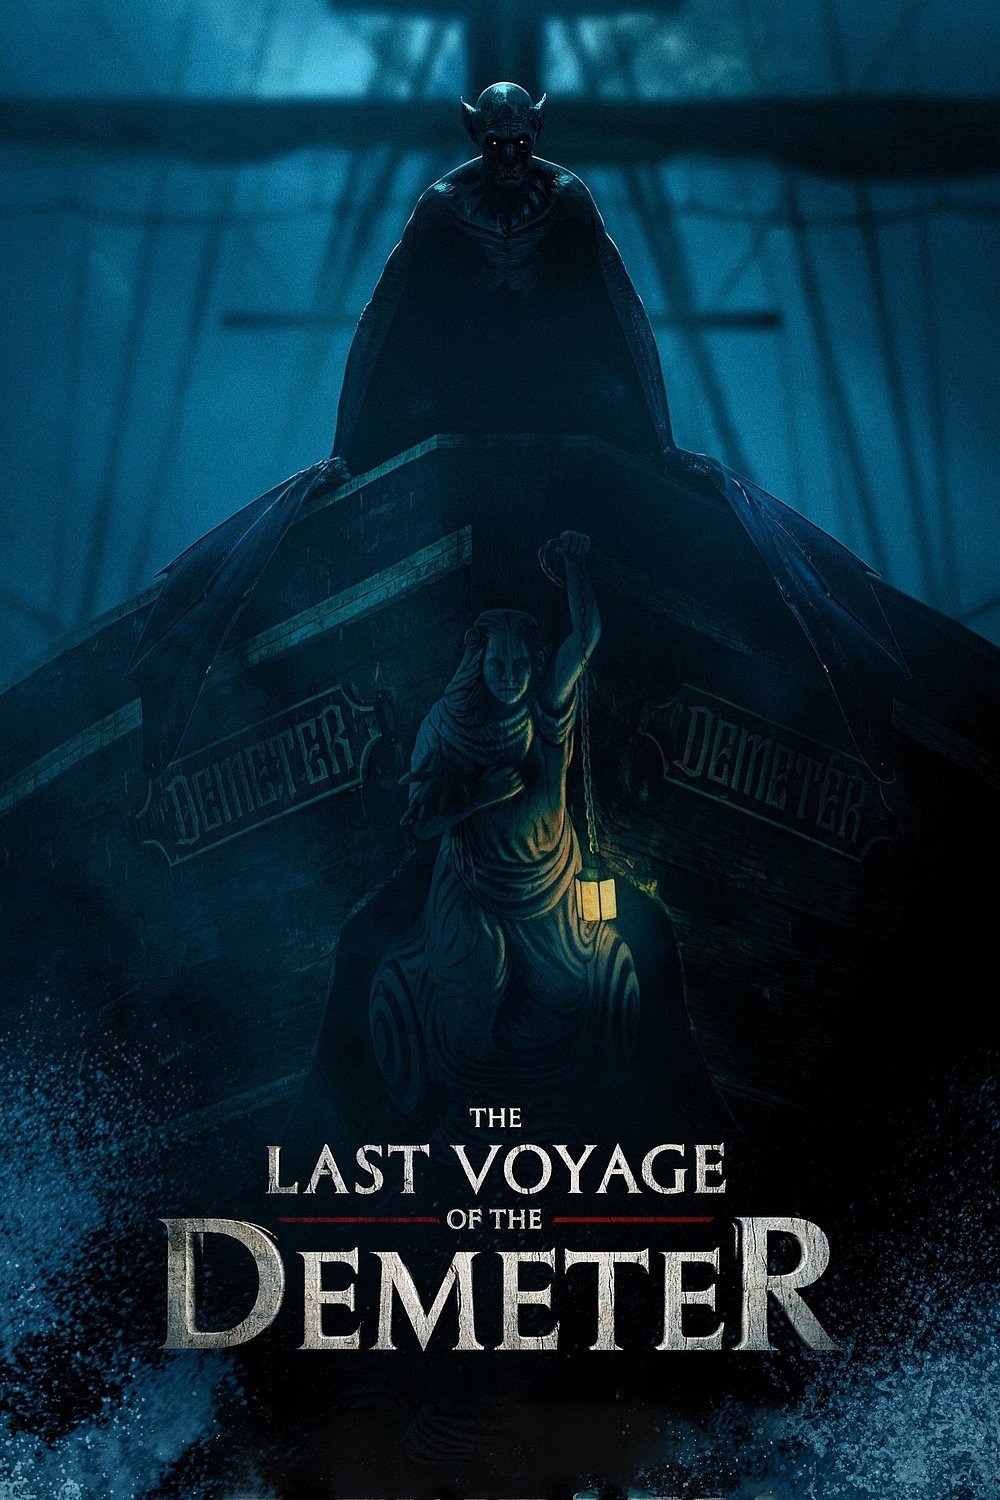 csm_The-Last-Voyage-Demeter-Poster_dea9edb991.jpg